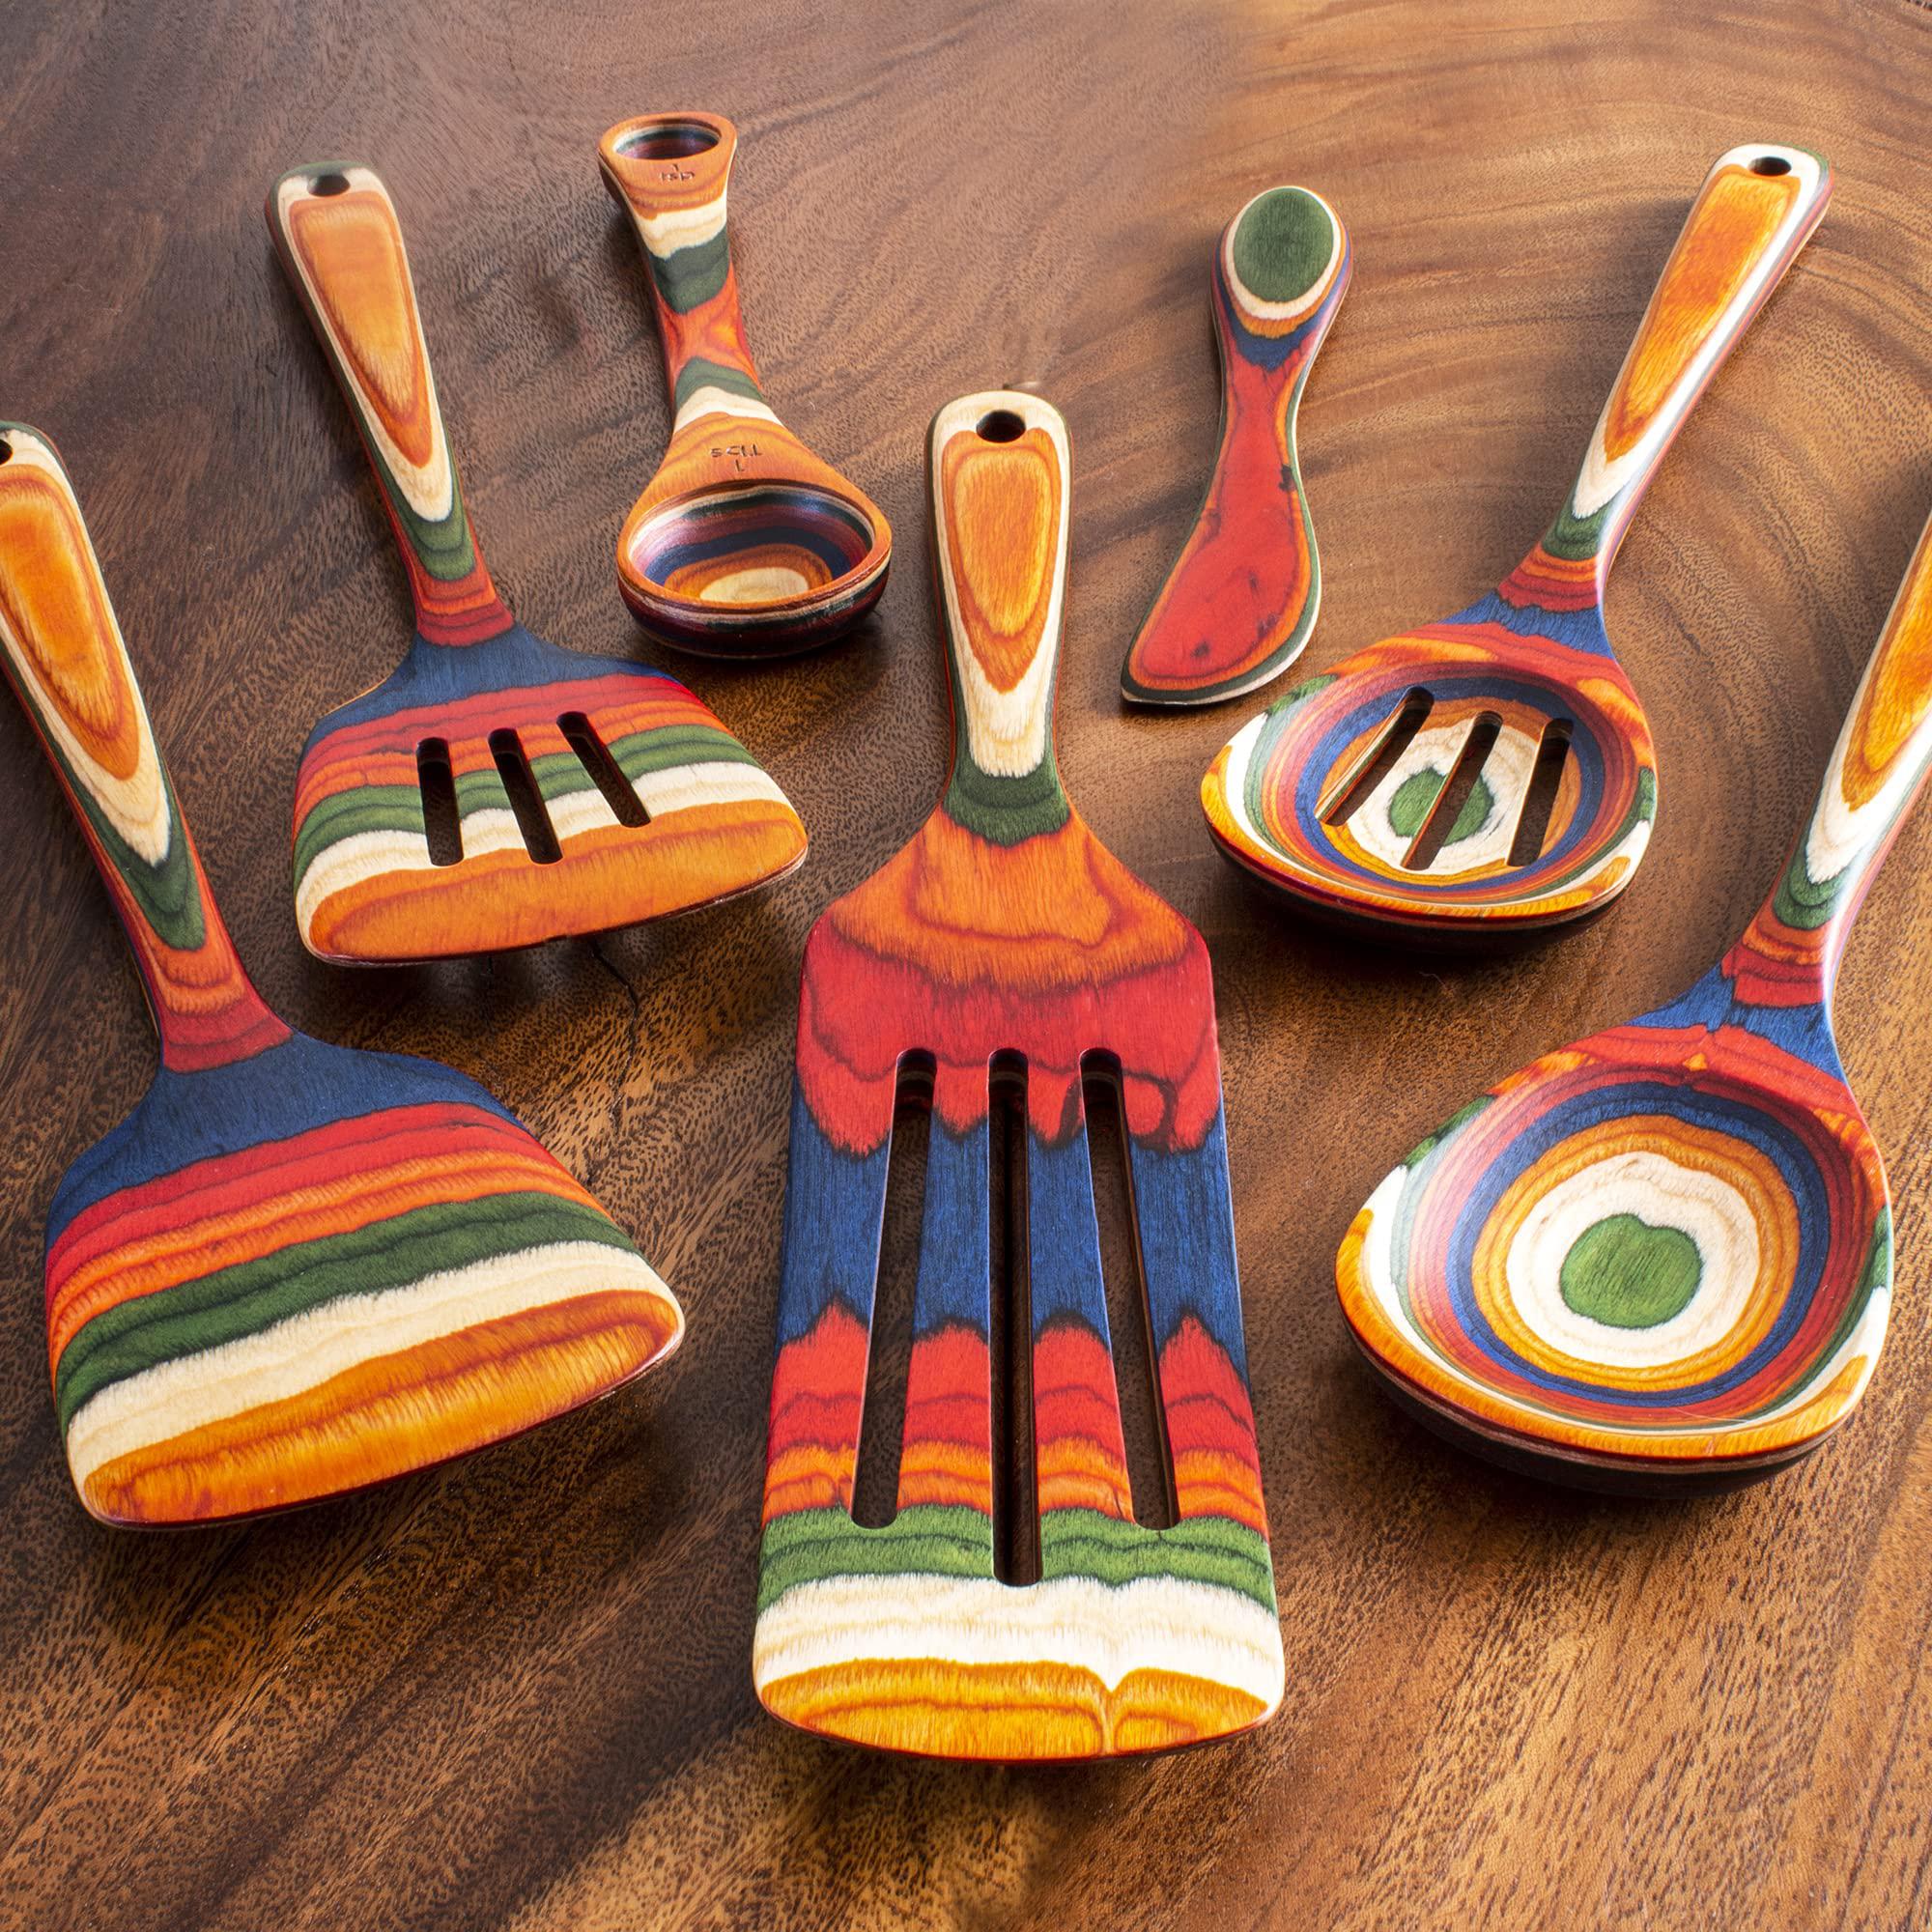 Totally Bamboo baltique marrakesh collection 7 piece cooking utensil set, safe for nonstick